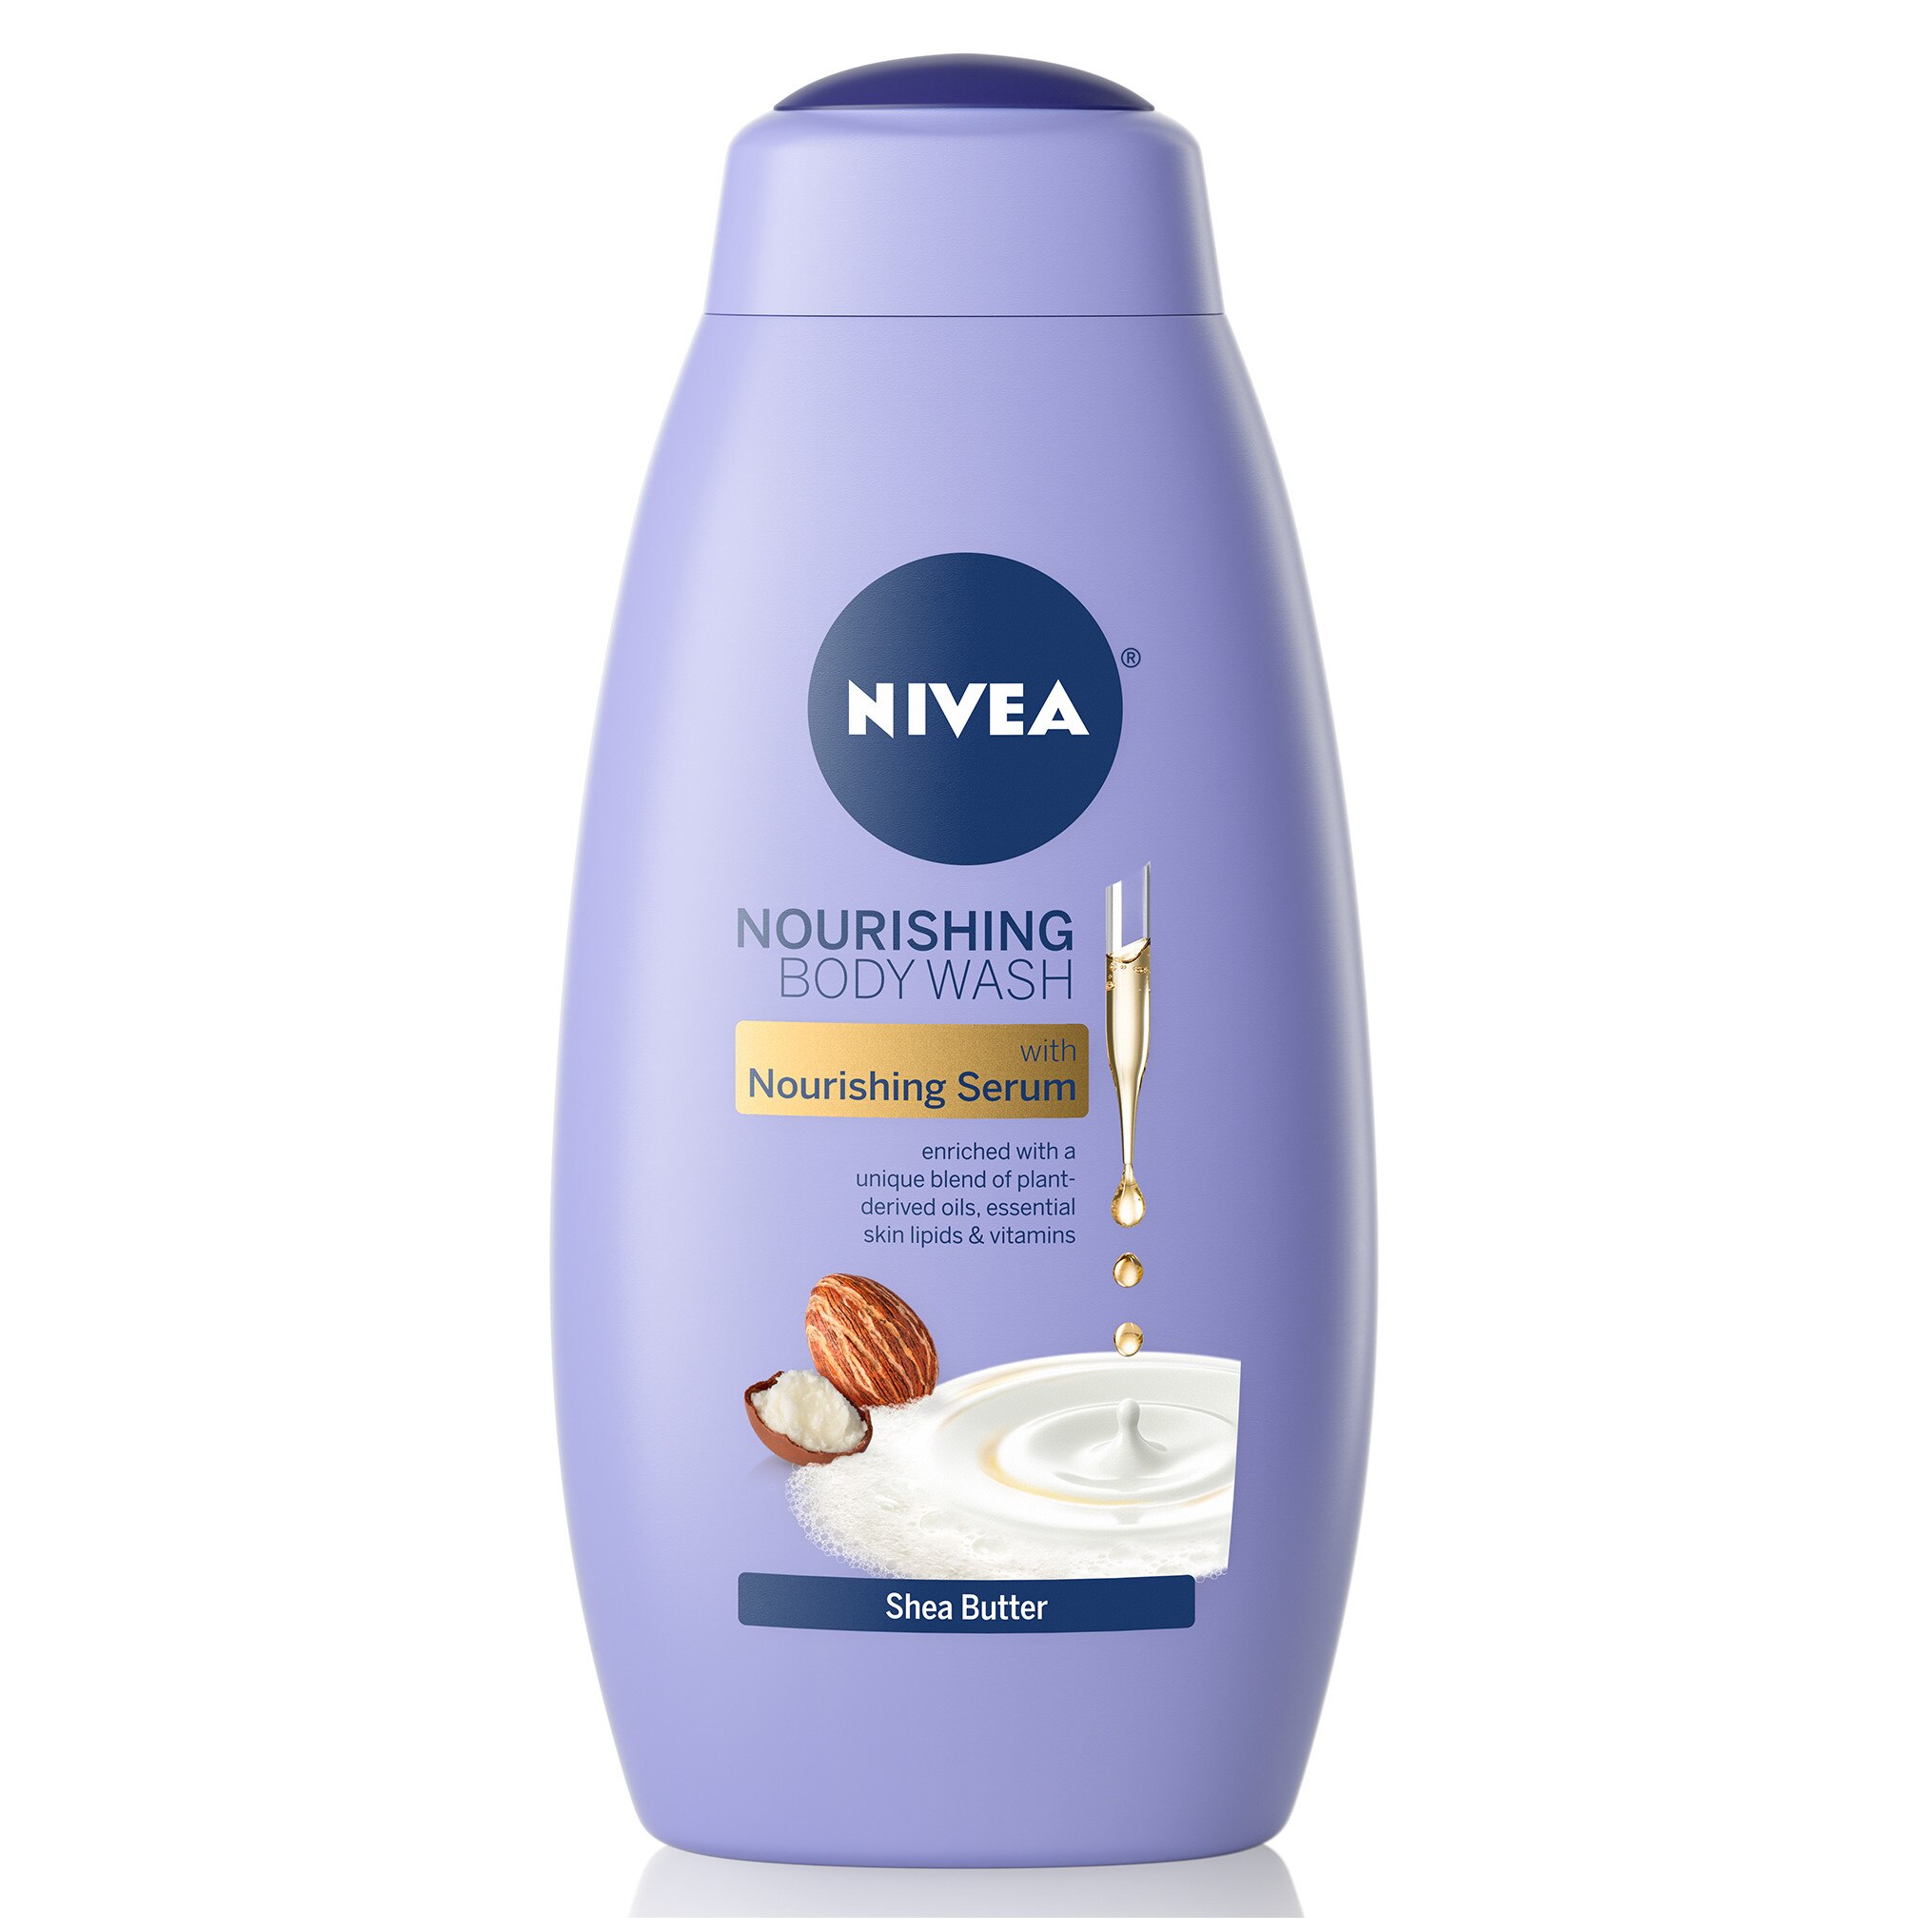 NIVEA Nourishing Care Body Wash with Nourishing Serum, 20 OZ